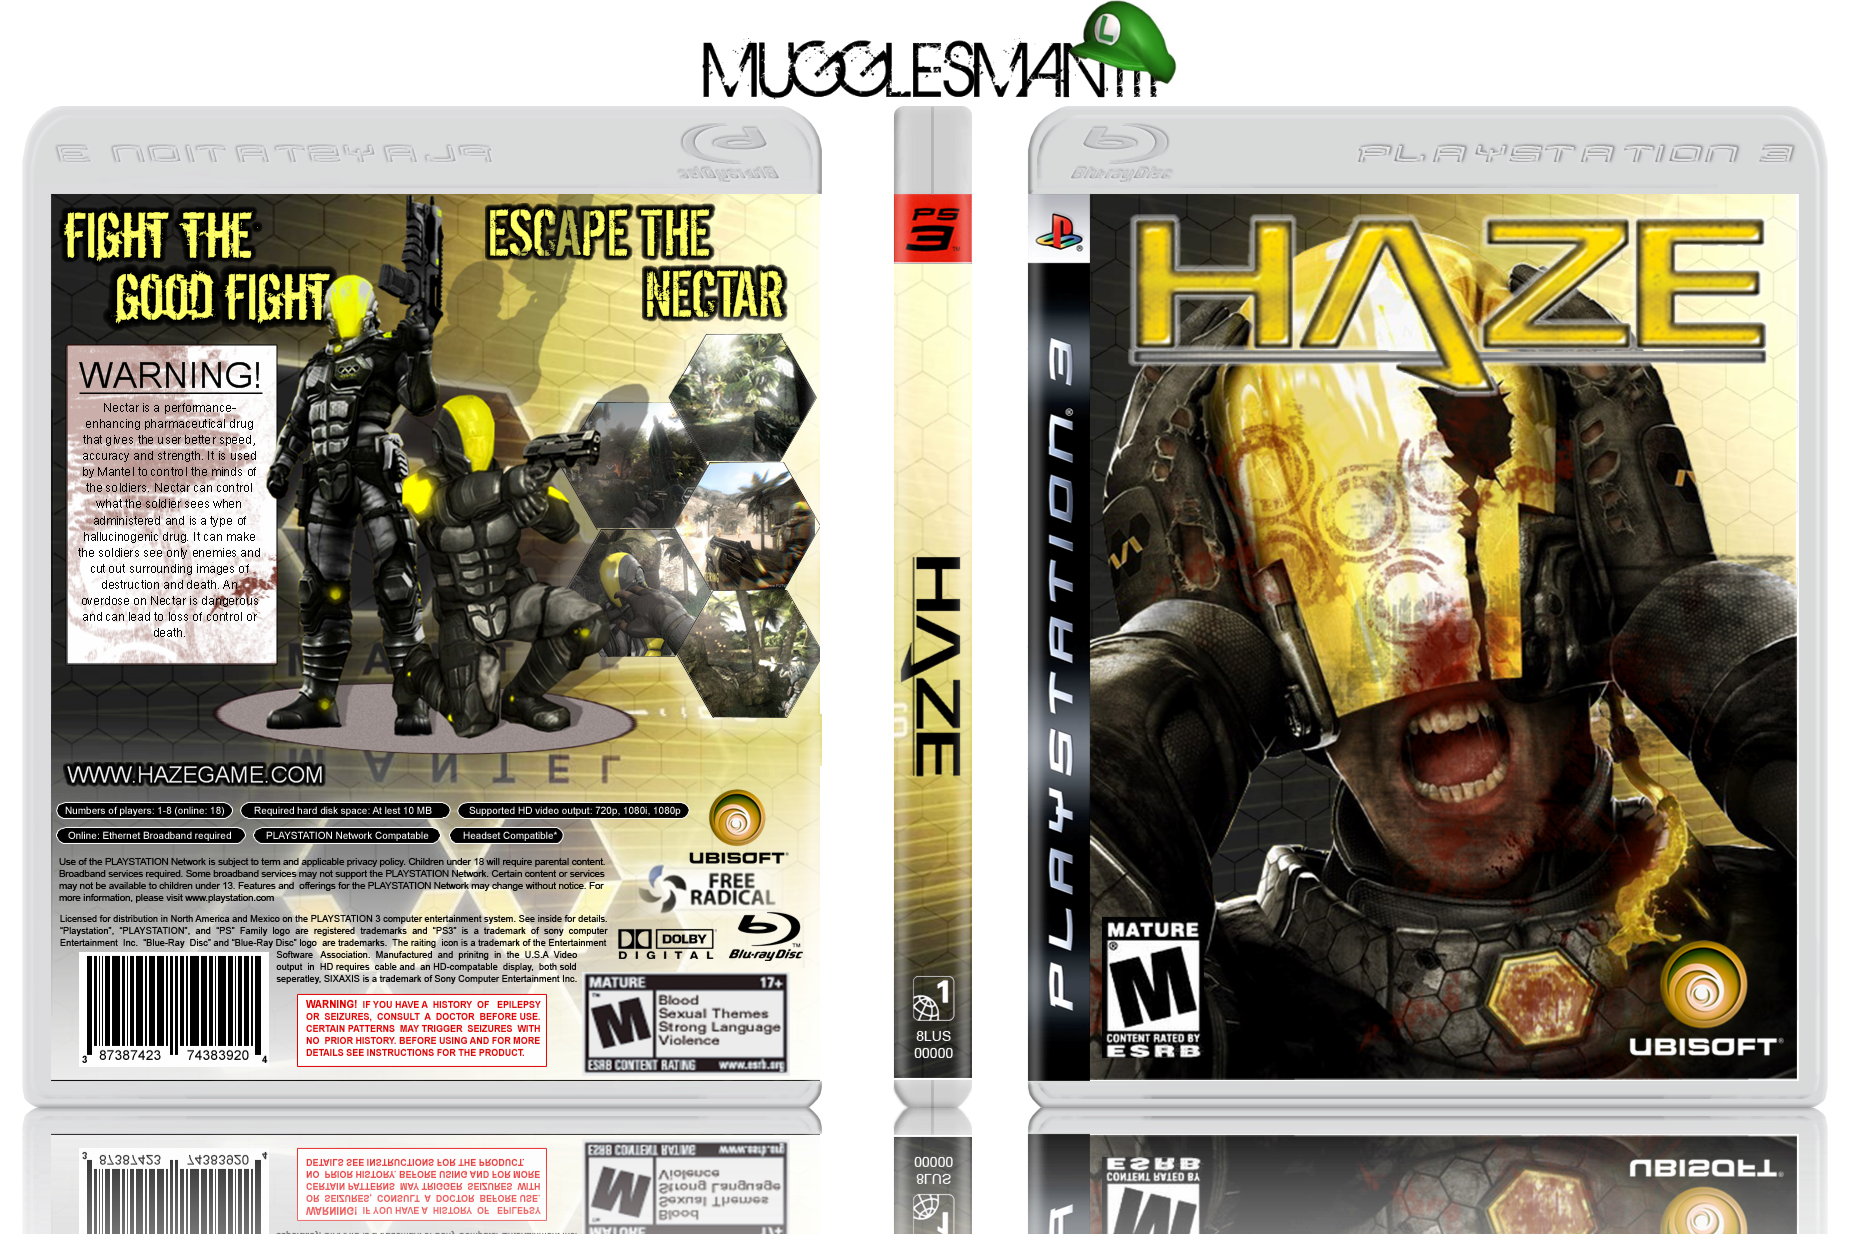 HAZE box cover